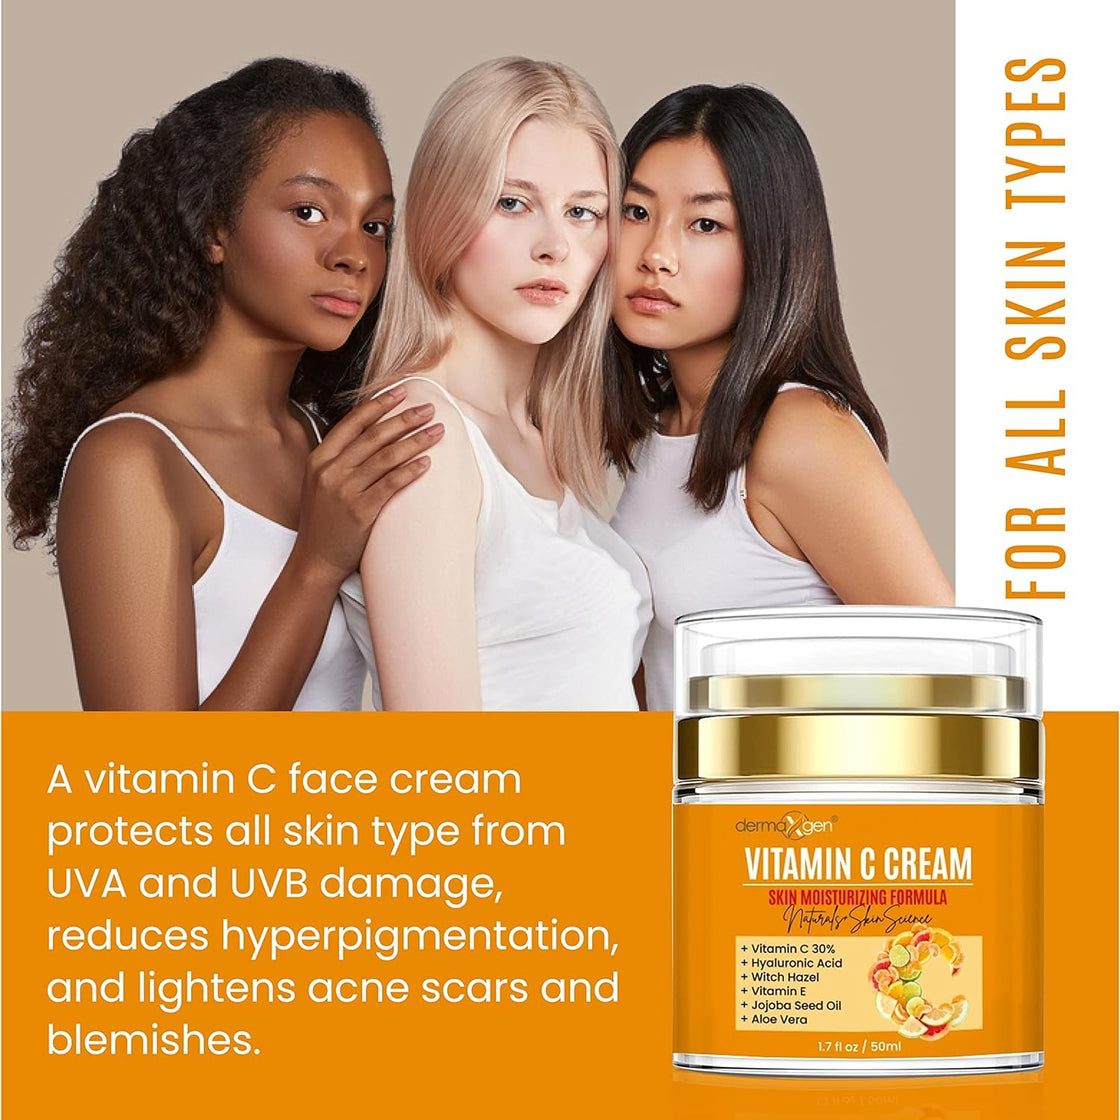 30% VITAMIN C Skin moisturizing Formula + Hyaluronic Acid + Witch Hazel + Vitamin E Jojoba Seed Oil + Aloe Vera for Reduces the Appearances of Wrinkles, Fine Lines and Dark Spots